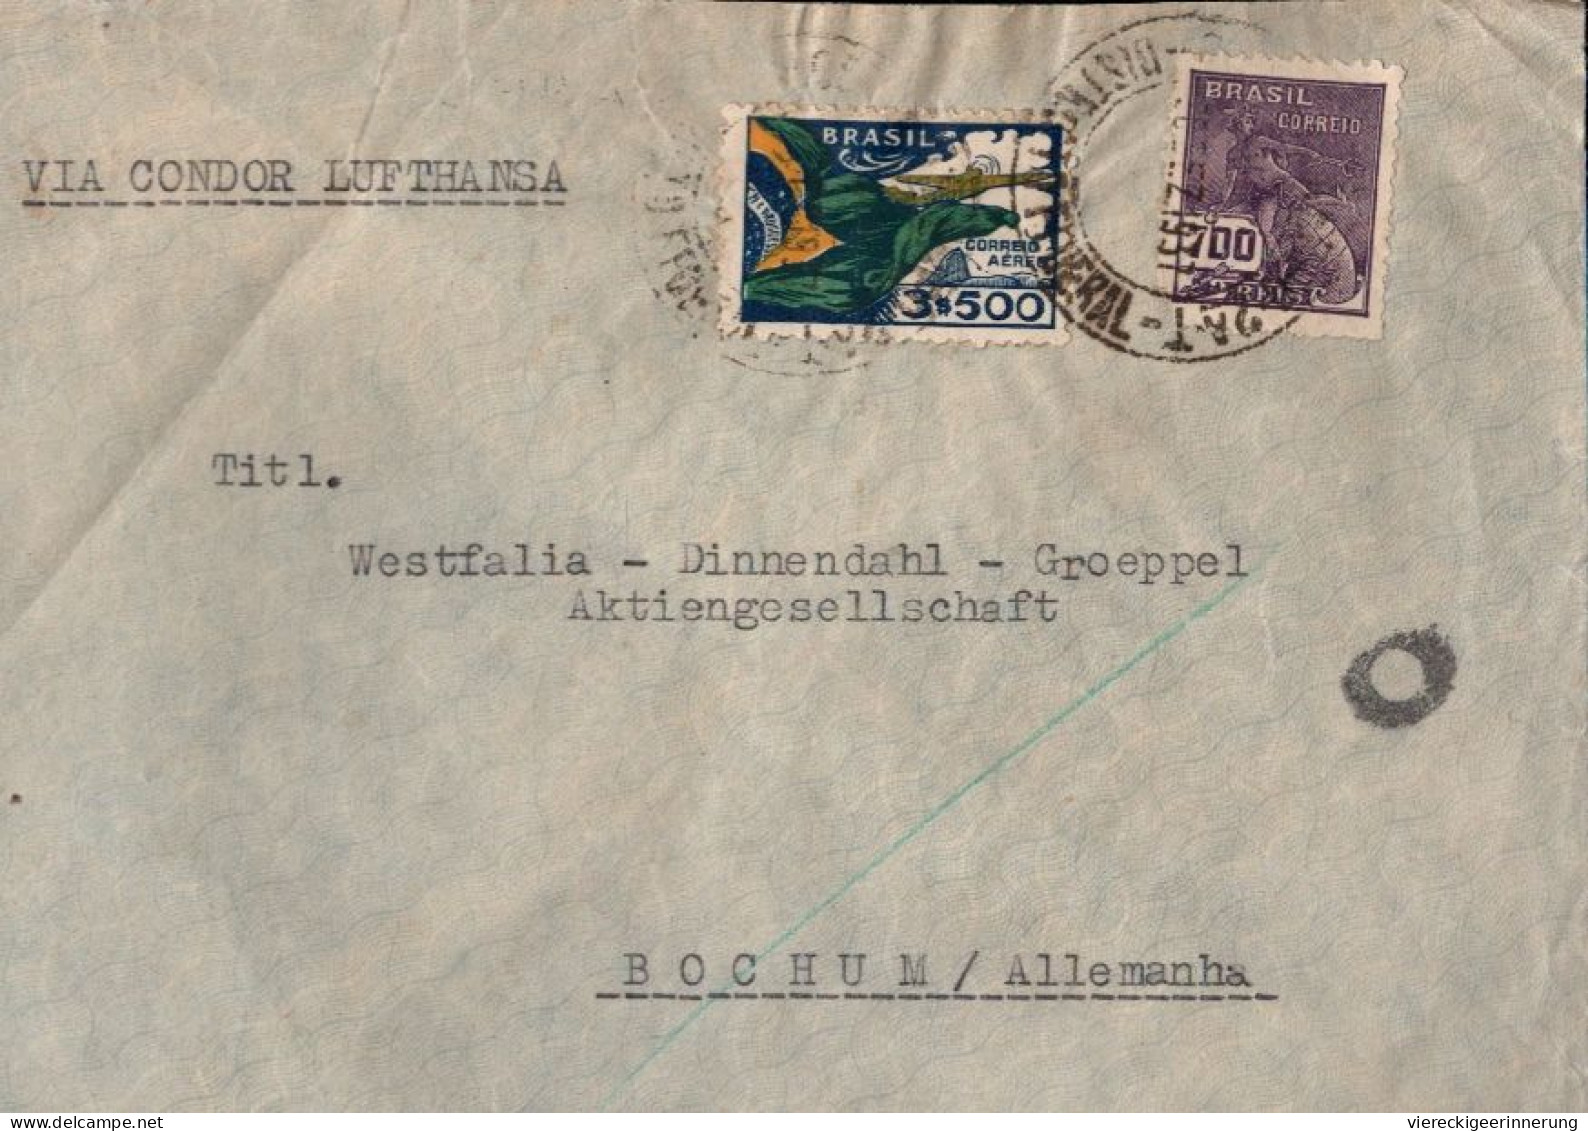 ! Luftpostbrief, Airmail Cover, 1937 Aus Rio De Janeiro, Brasilien, Via Condor Lufthansa, Nach Bochum - Luftpost